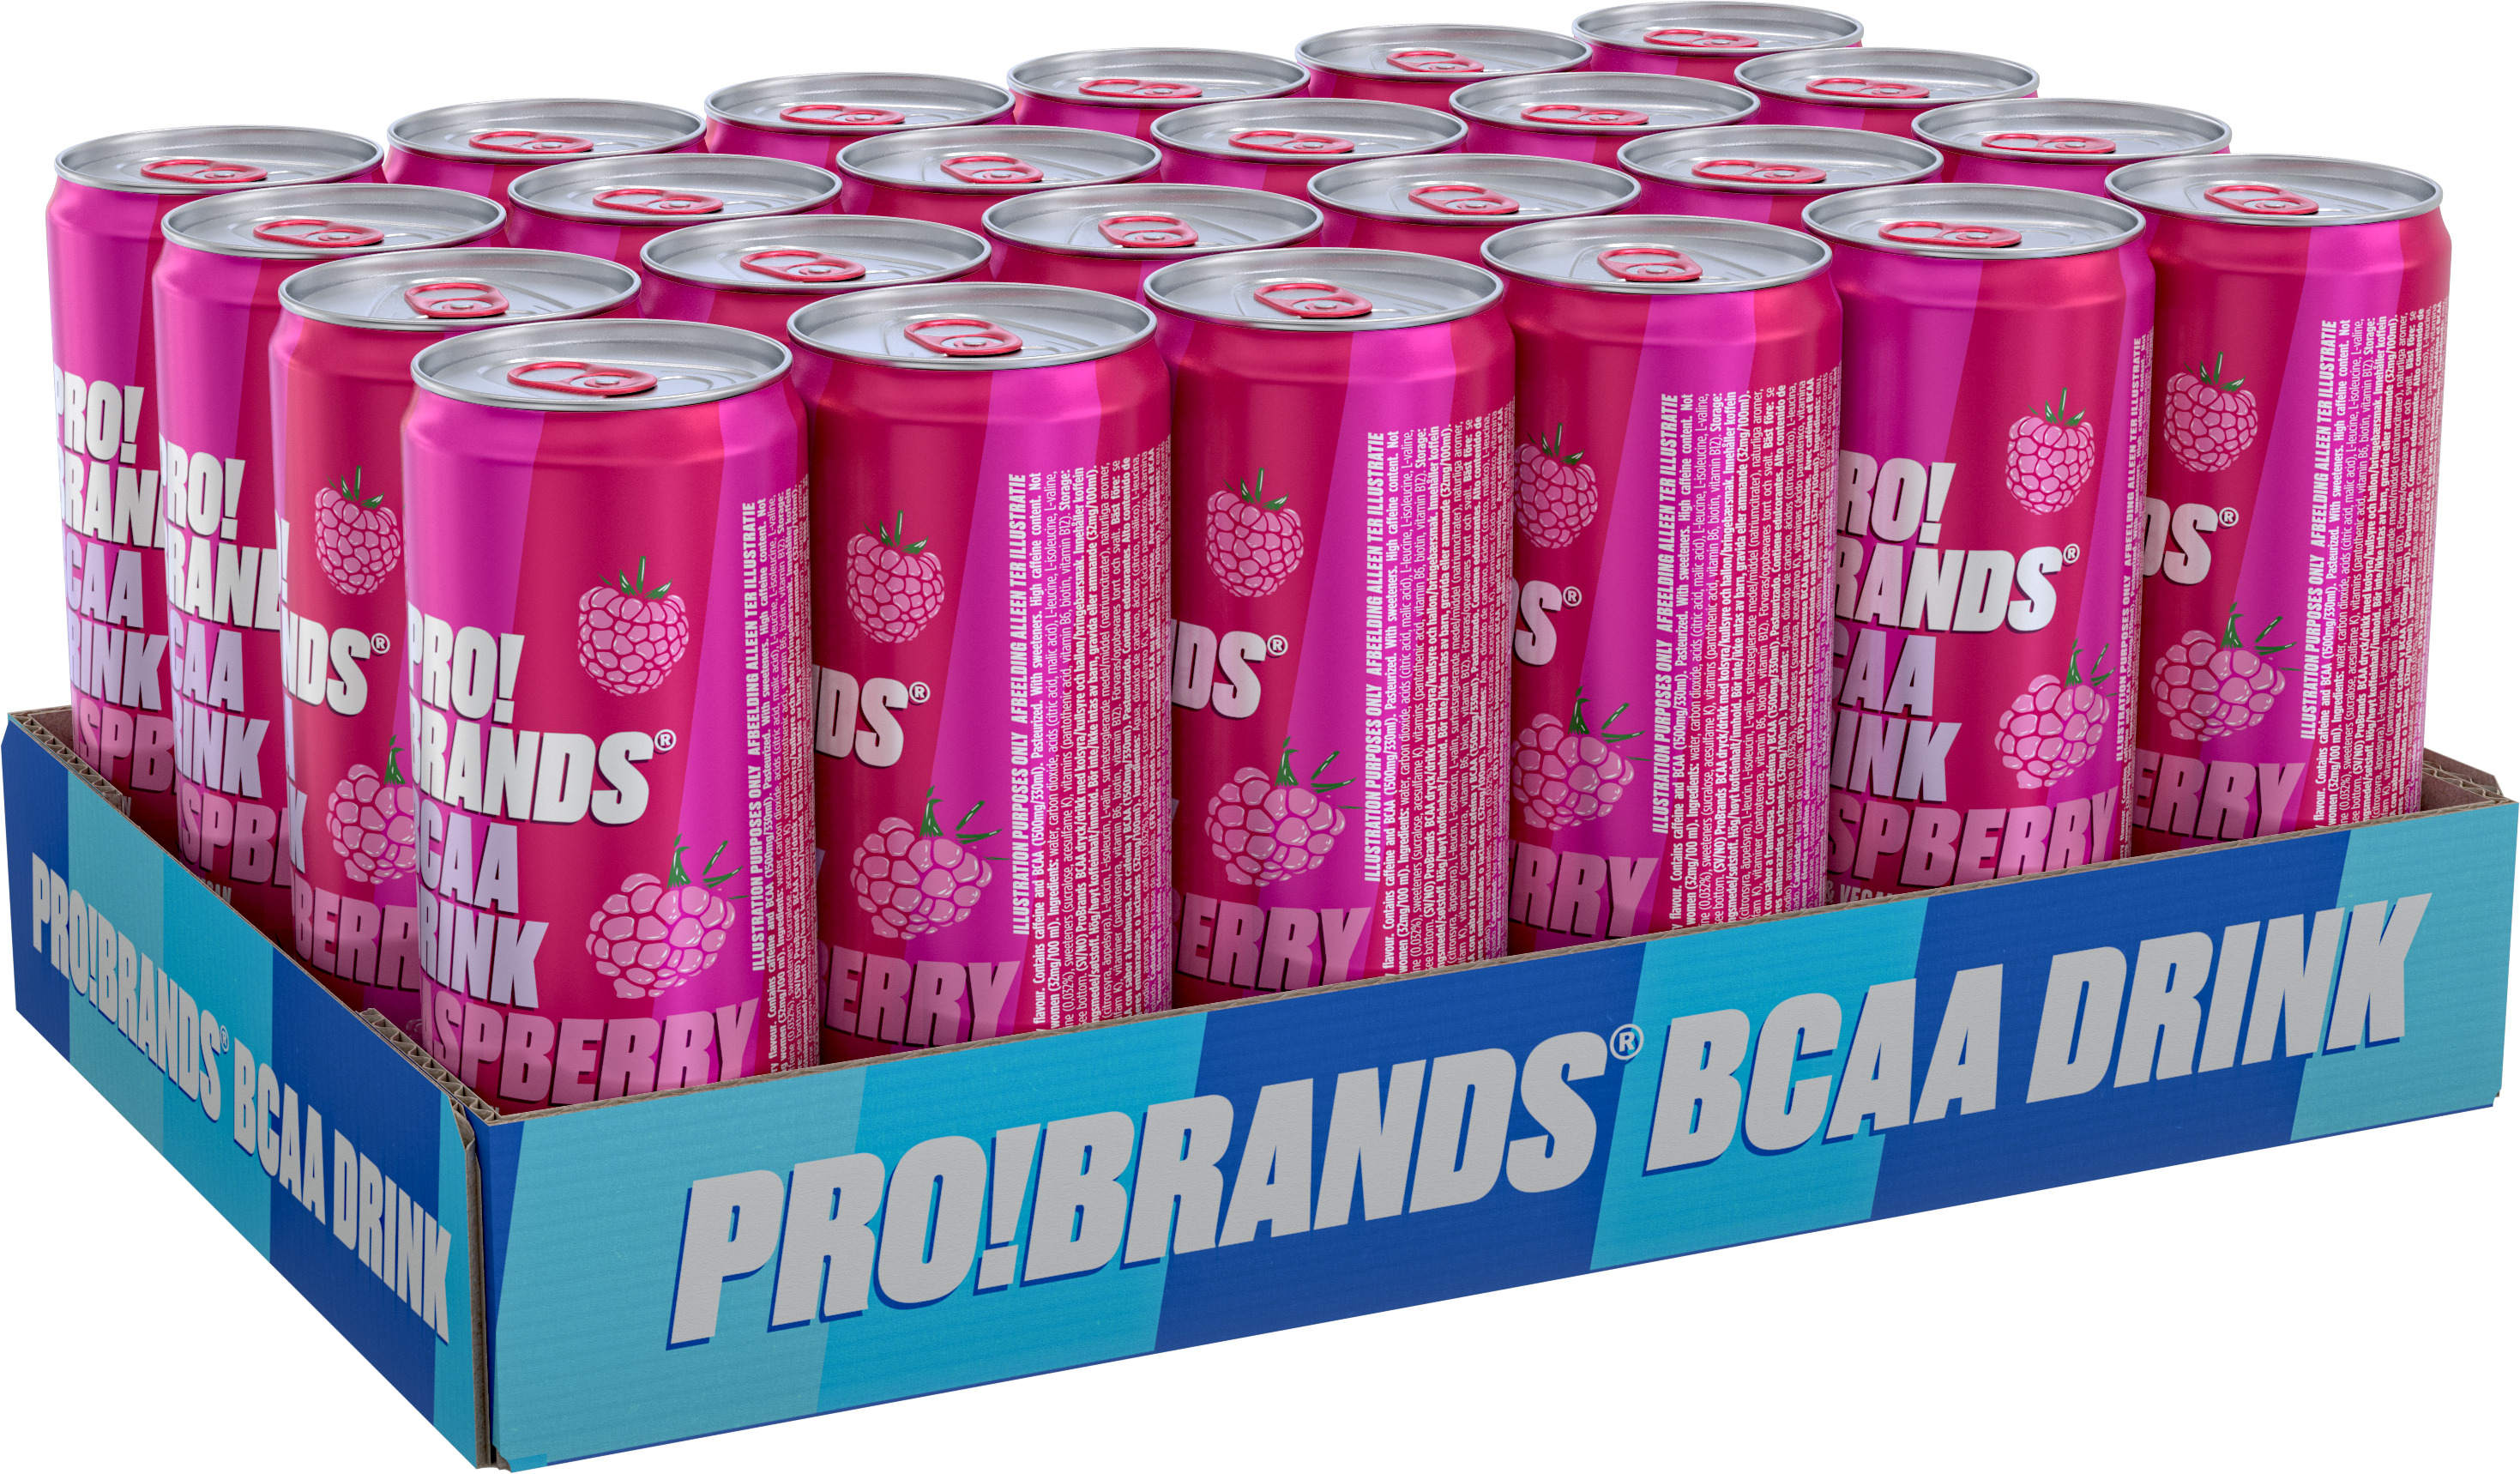 Pro Brands BCAA Drink (24 x 330ml)